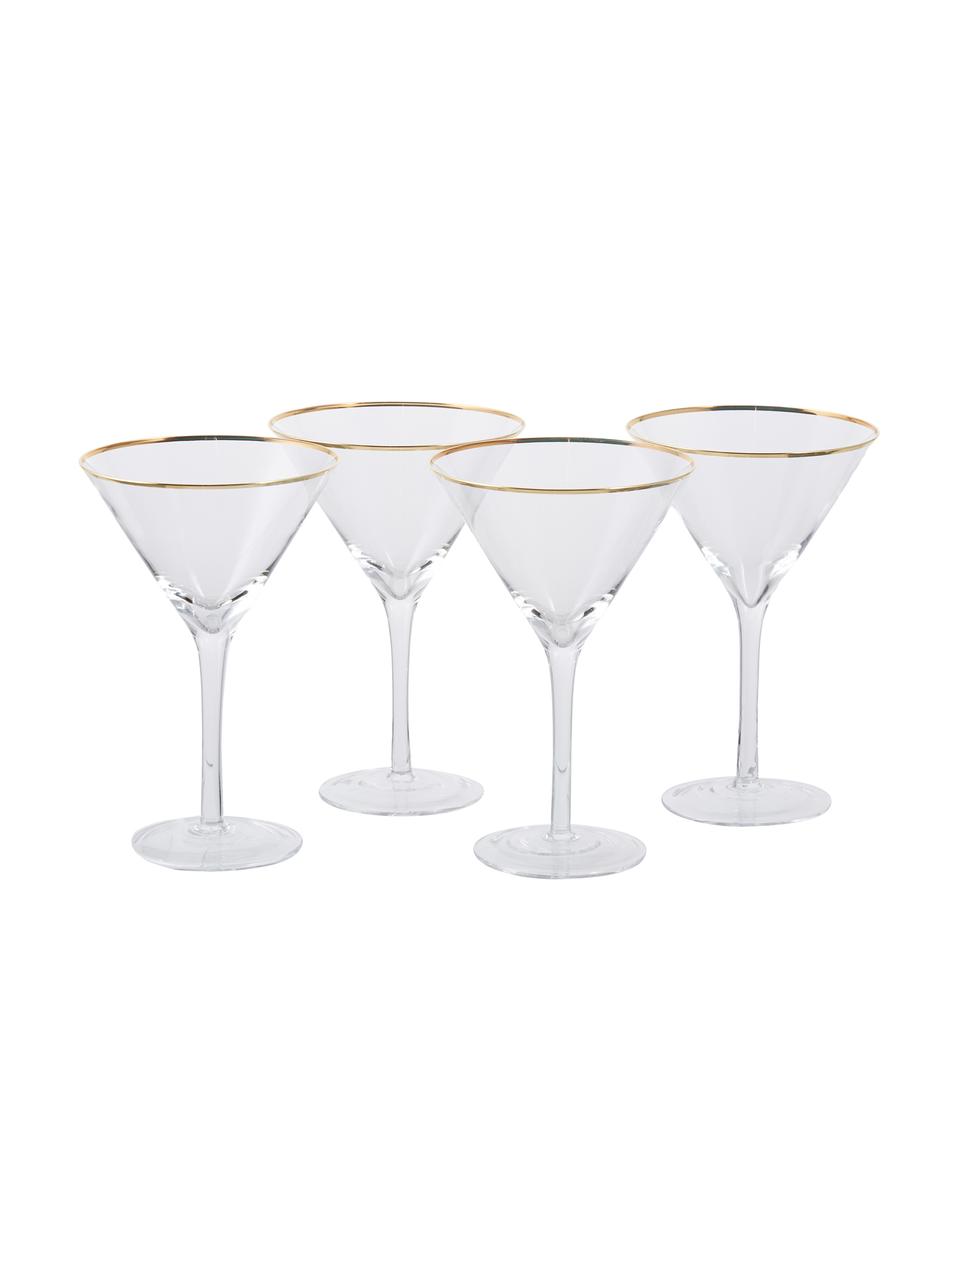 Martinigläser Chloe in Transparent mit Goldrand, 4 Stück, Glas, Transparent, Ø 12 x H 19 cm